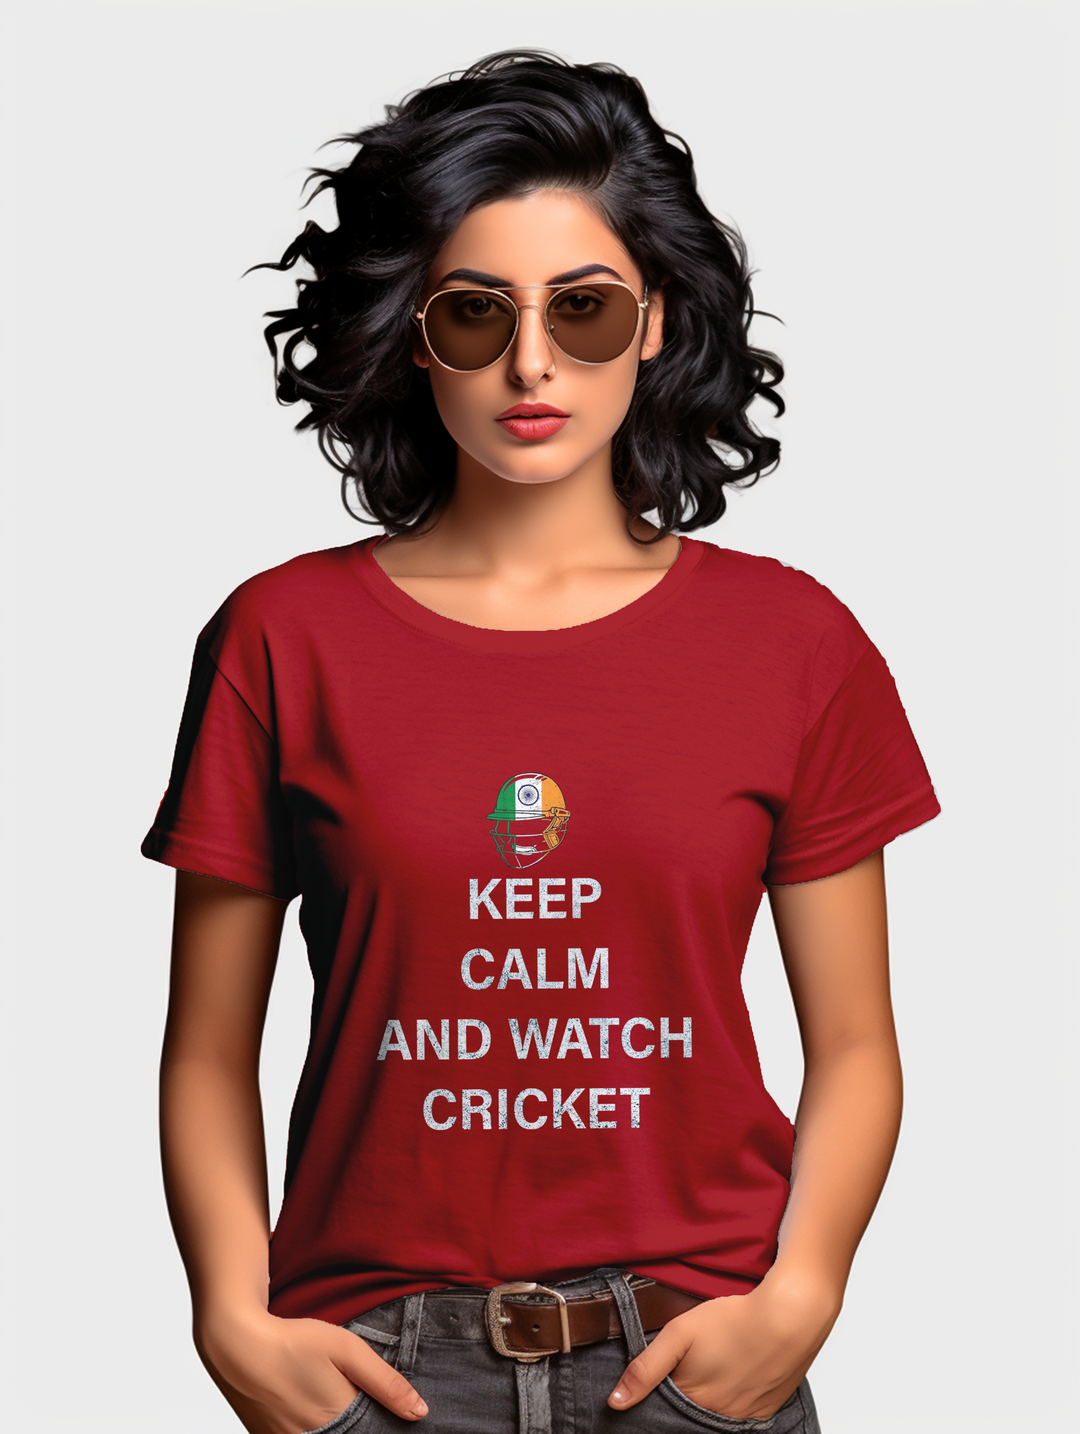 Women's Keep calm and watch cricket tee